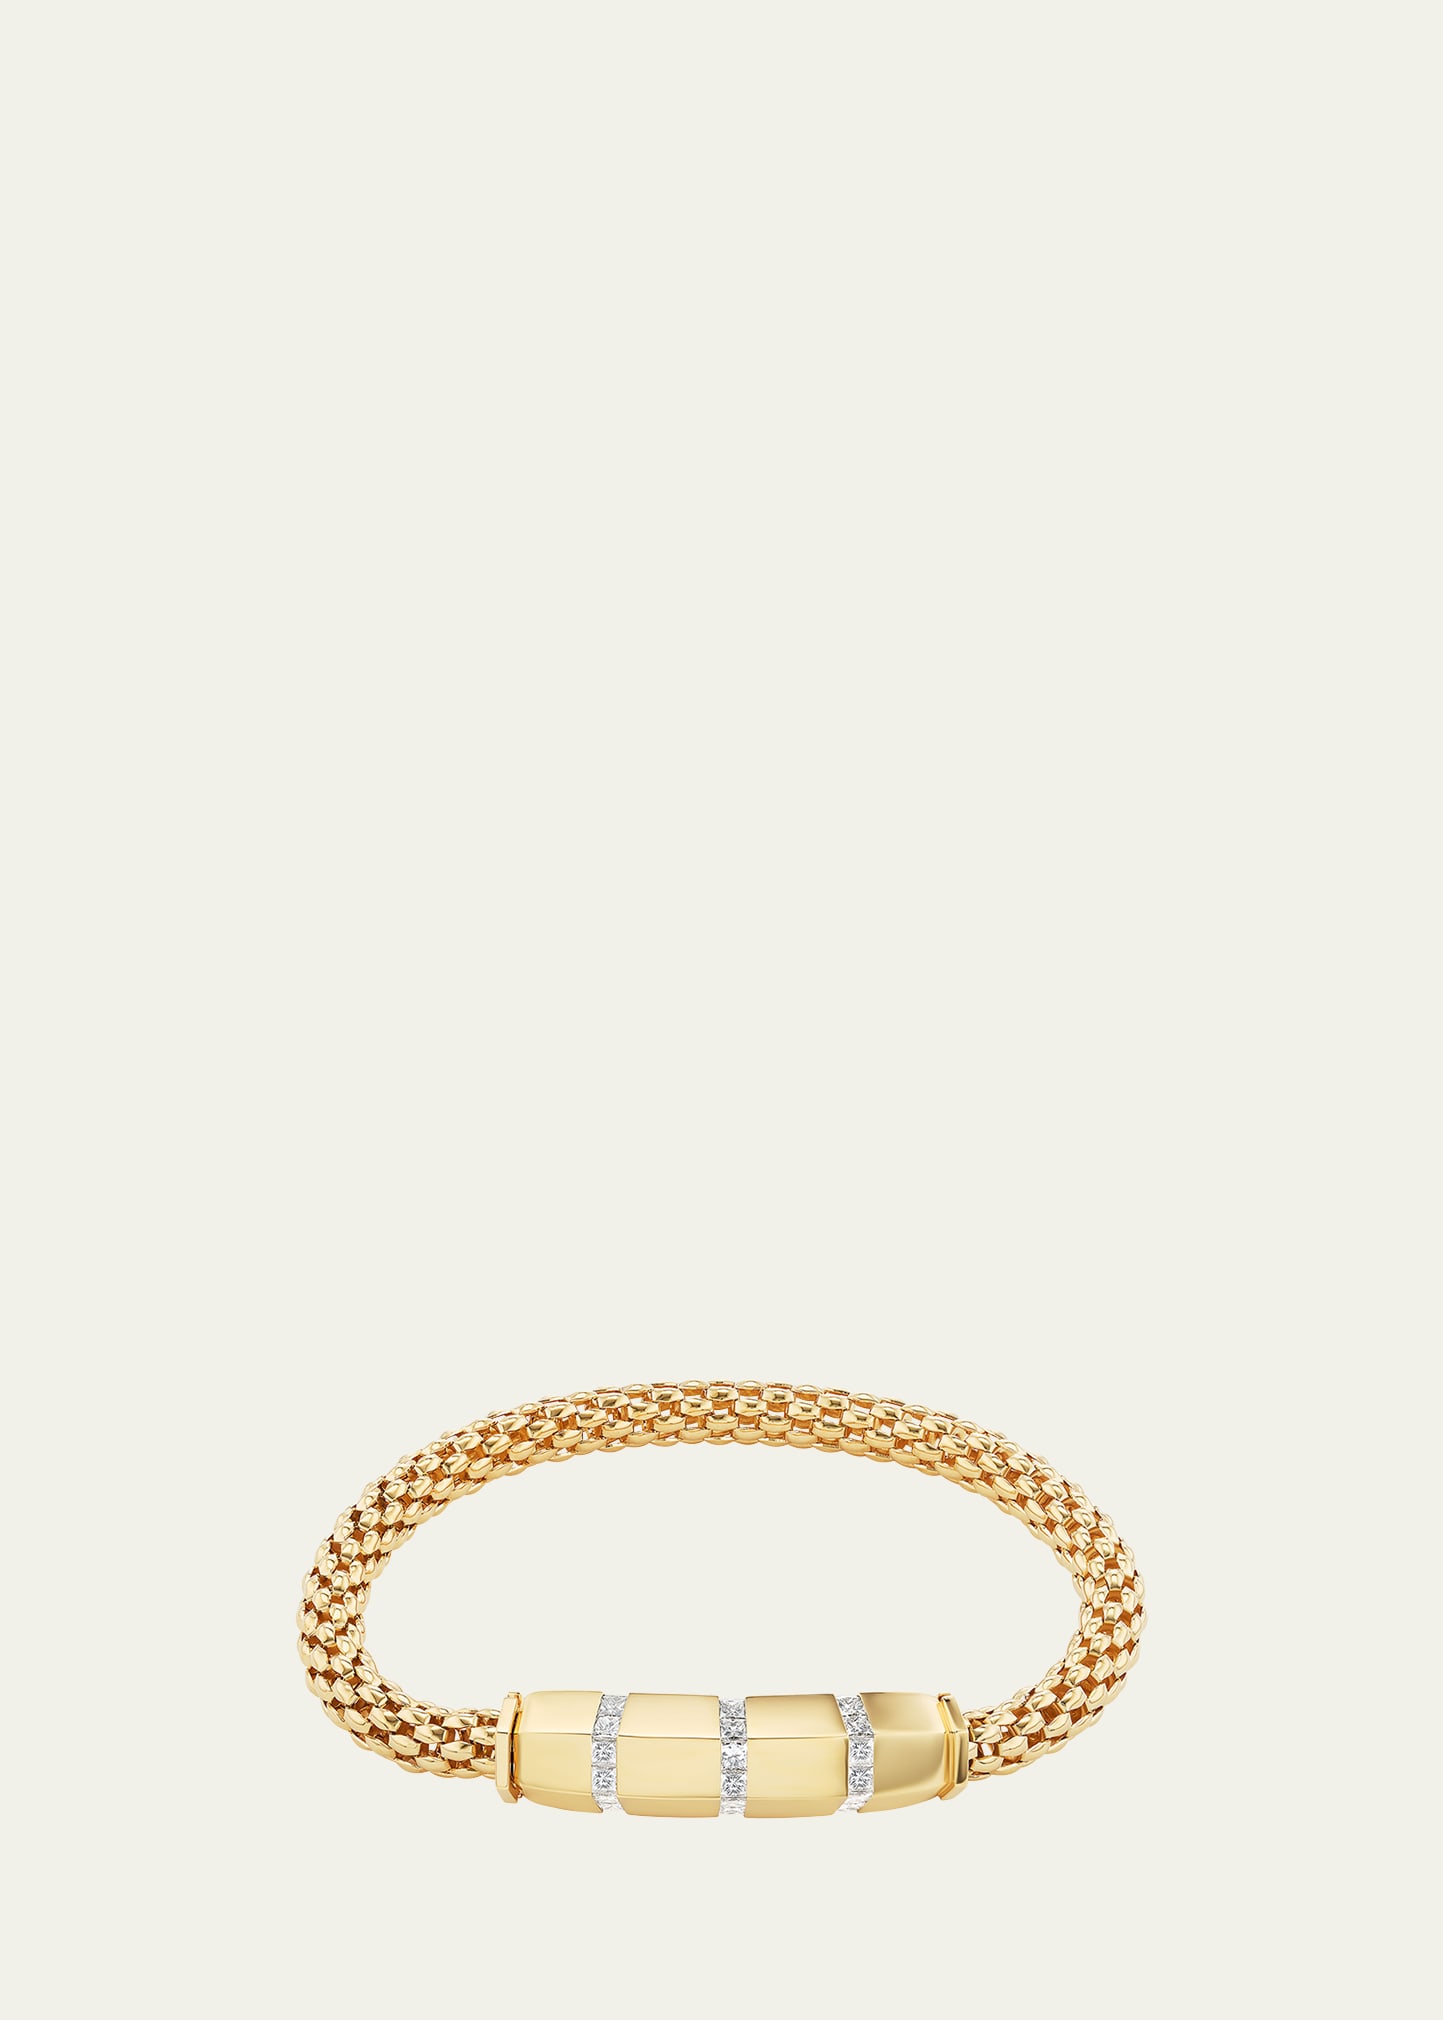 Stella Bar Bracelet in Yellow Gold with Diamonds, Size M